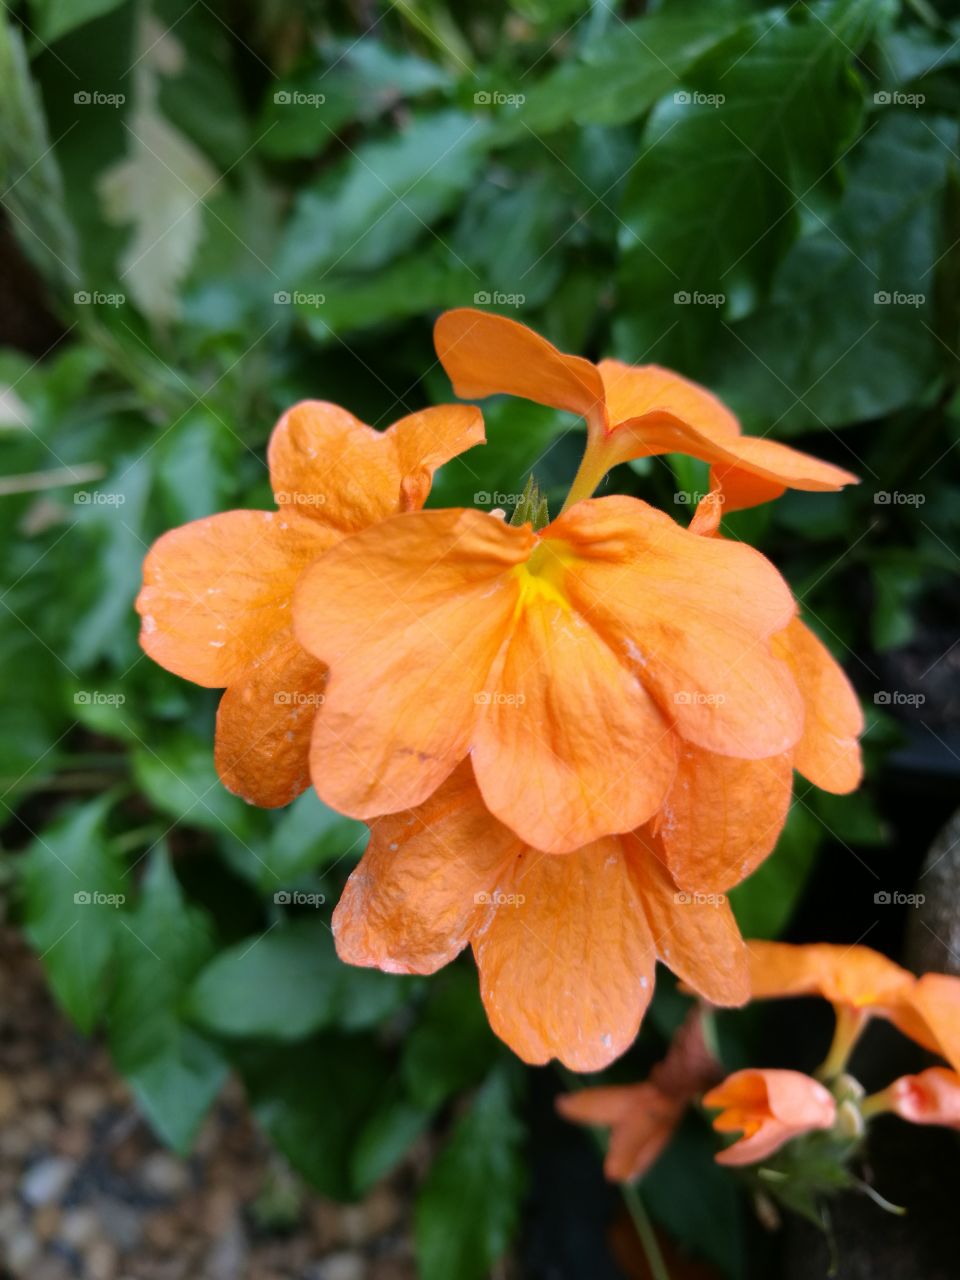 Closeup of Cassandra flower with orange petals.